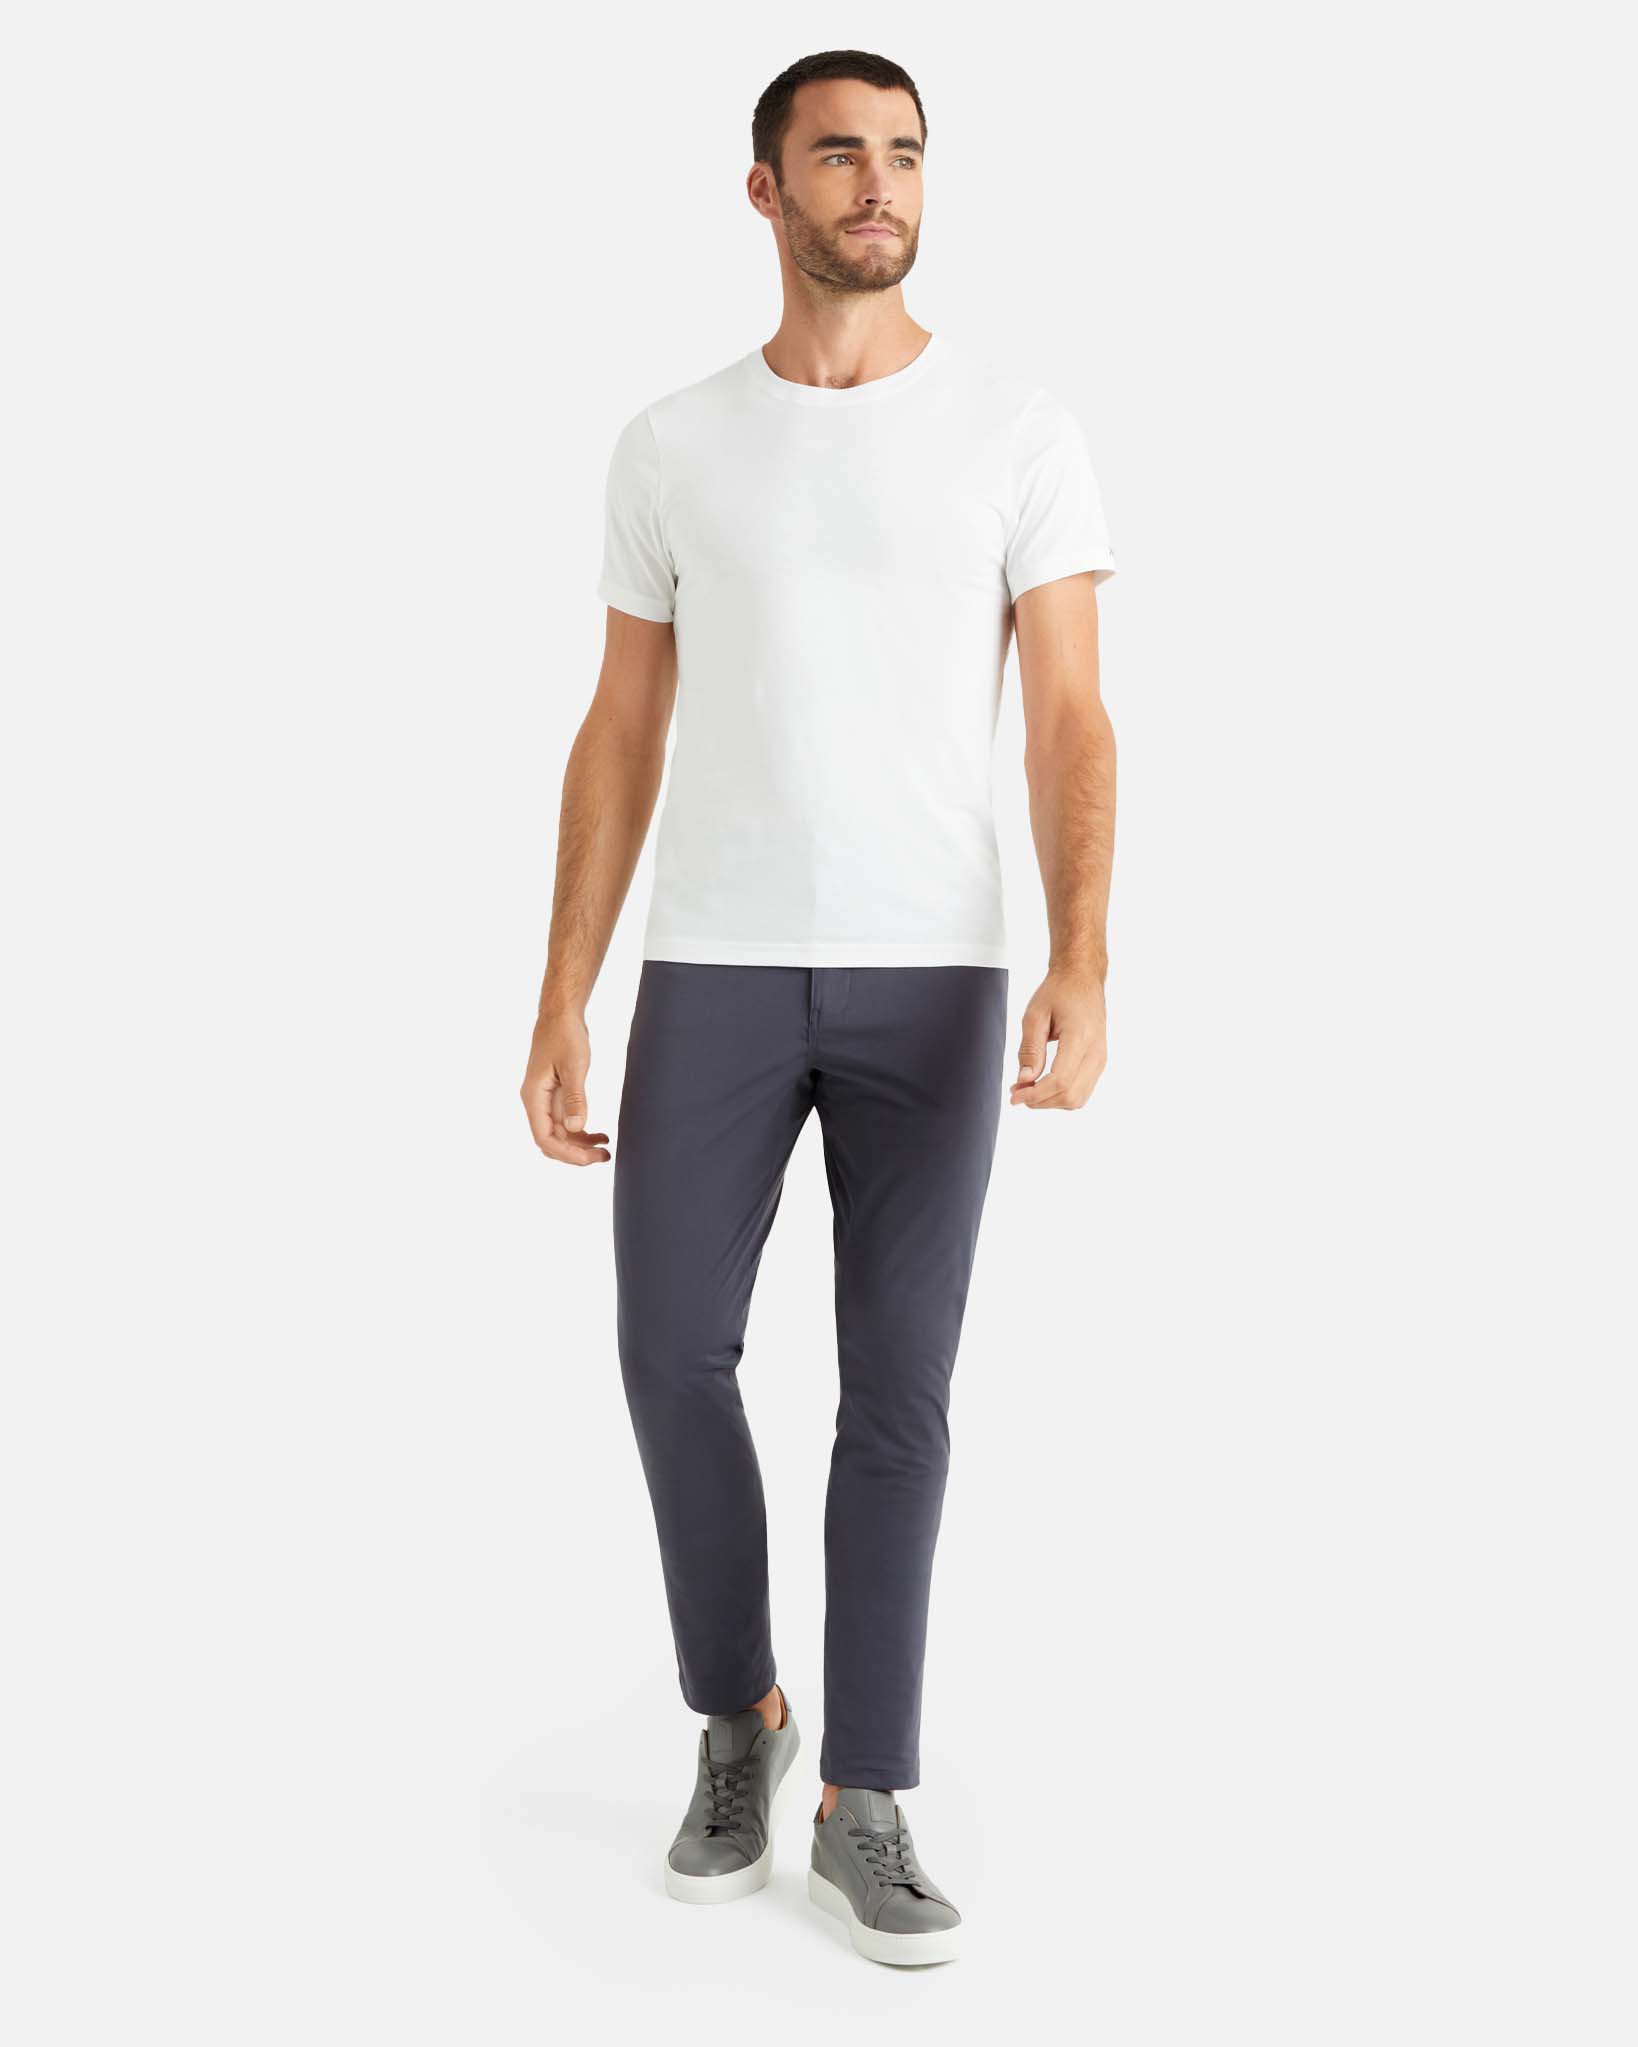 Rhone Commuter Pants for Men, Skinny Mens Pants, Machine Washable, Wrinkle  Resistant, Stretch Ultra-Slim Leg Casual Pants Black W28-30L at   Men's Clothing store